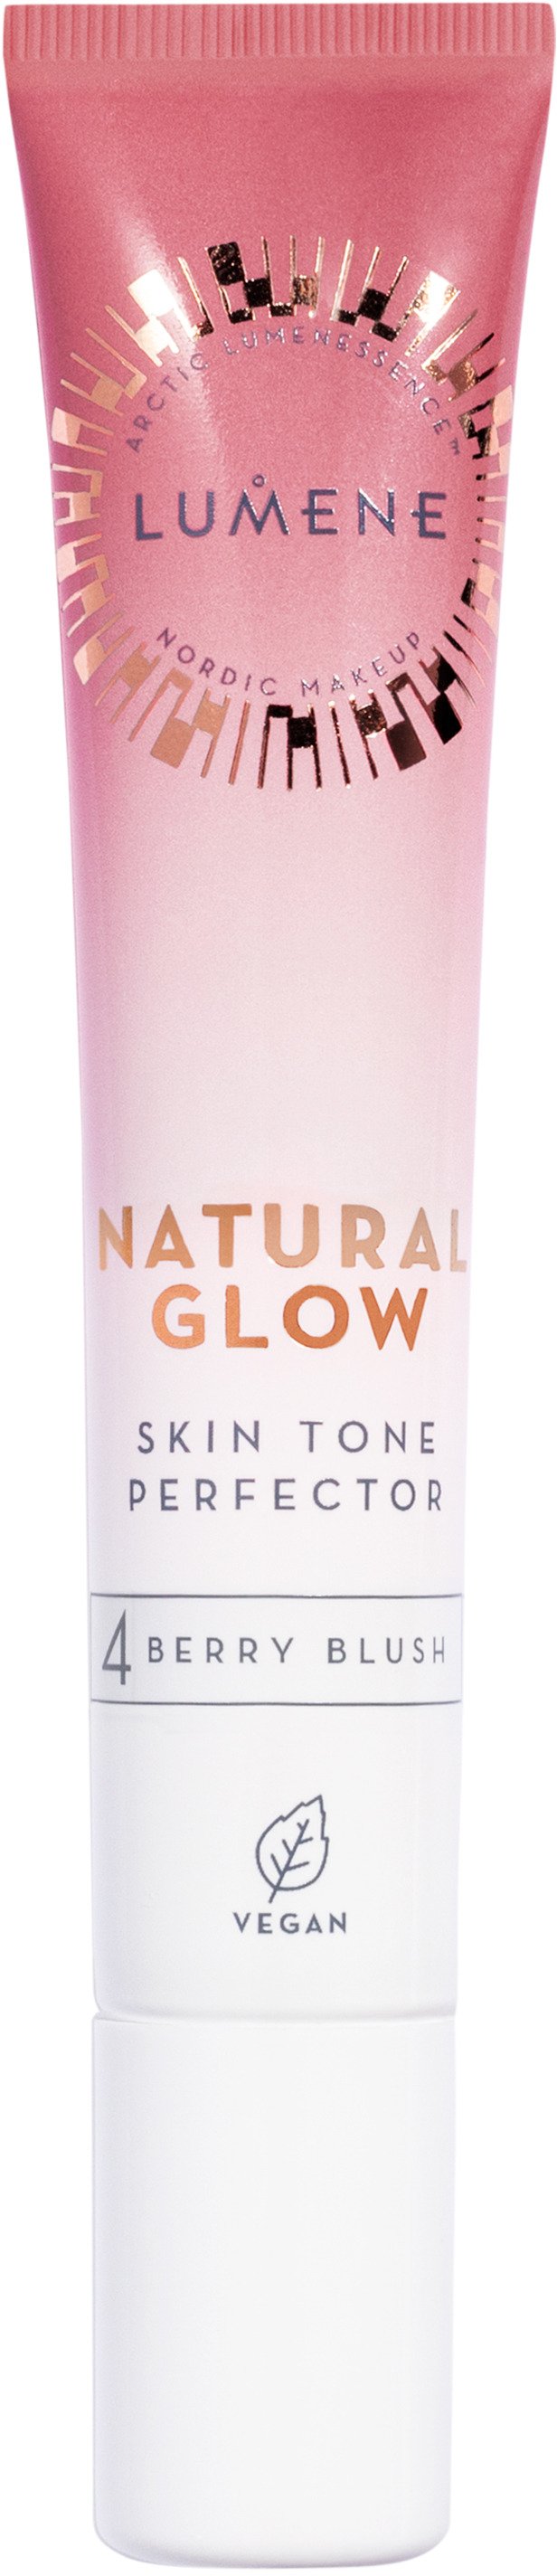 Lumene Natural Glow Skin Tone Perfector 4 Berry Blush 20 ml